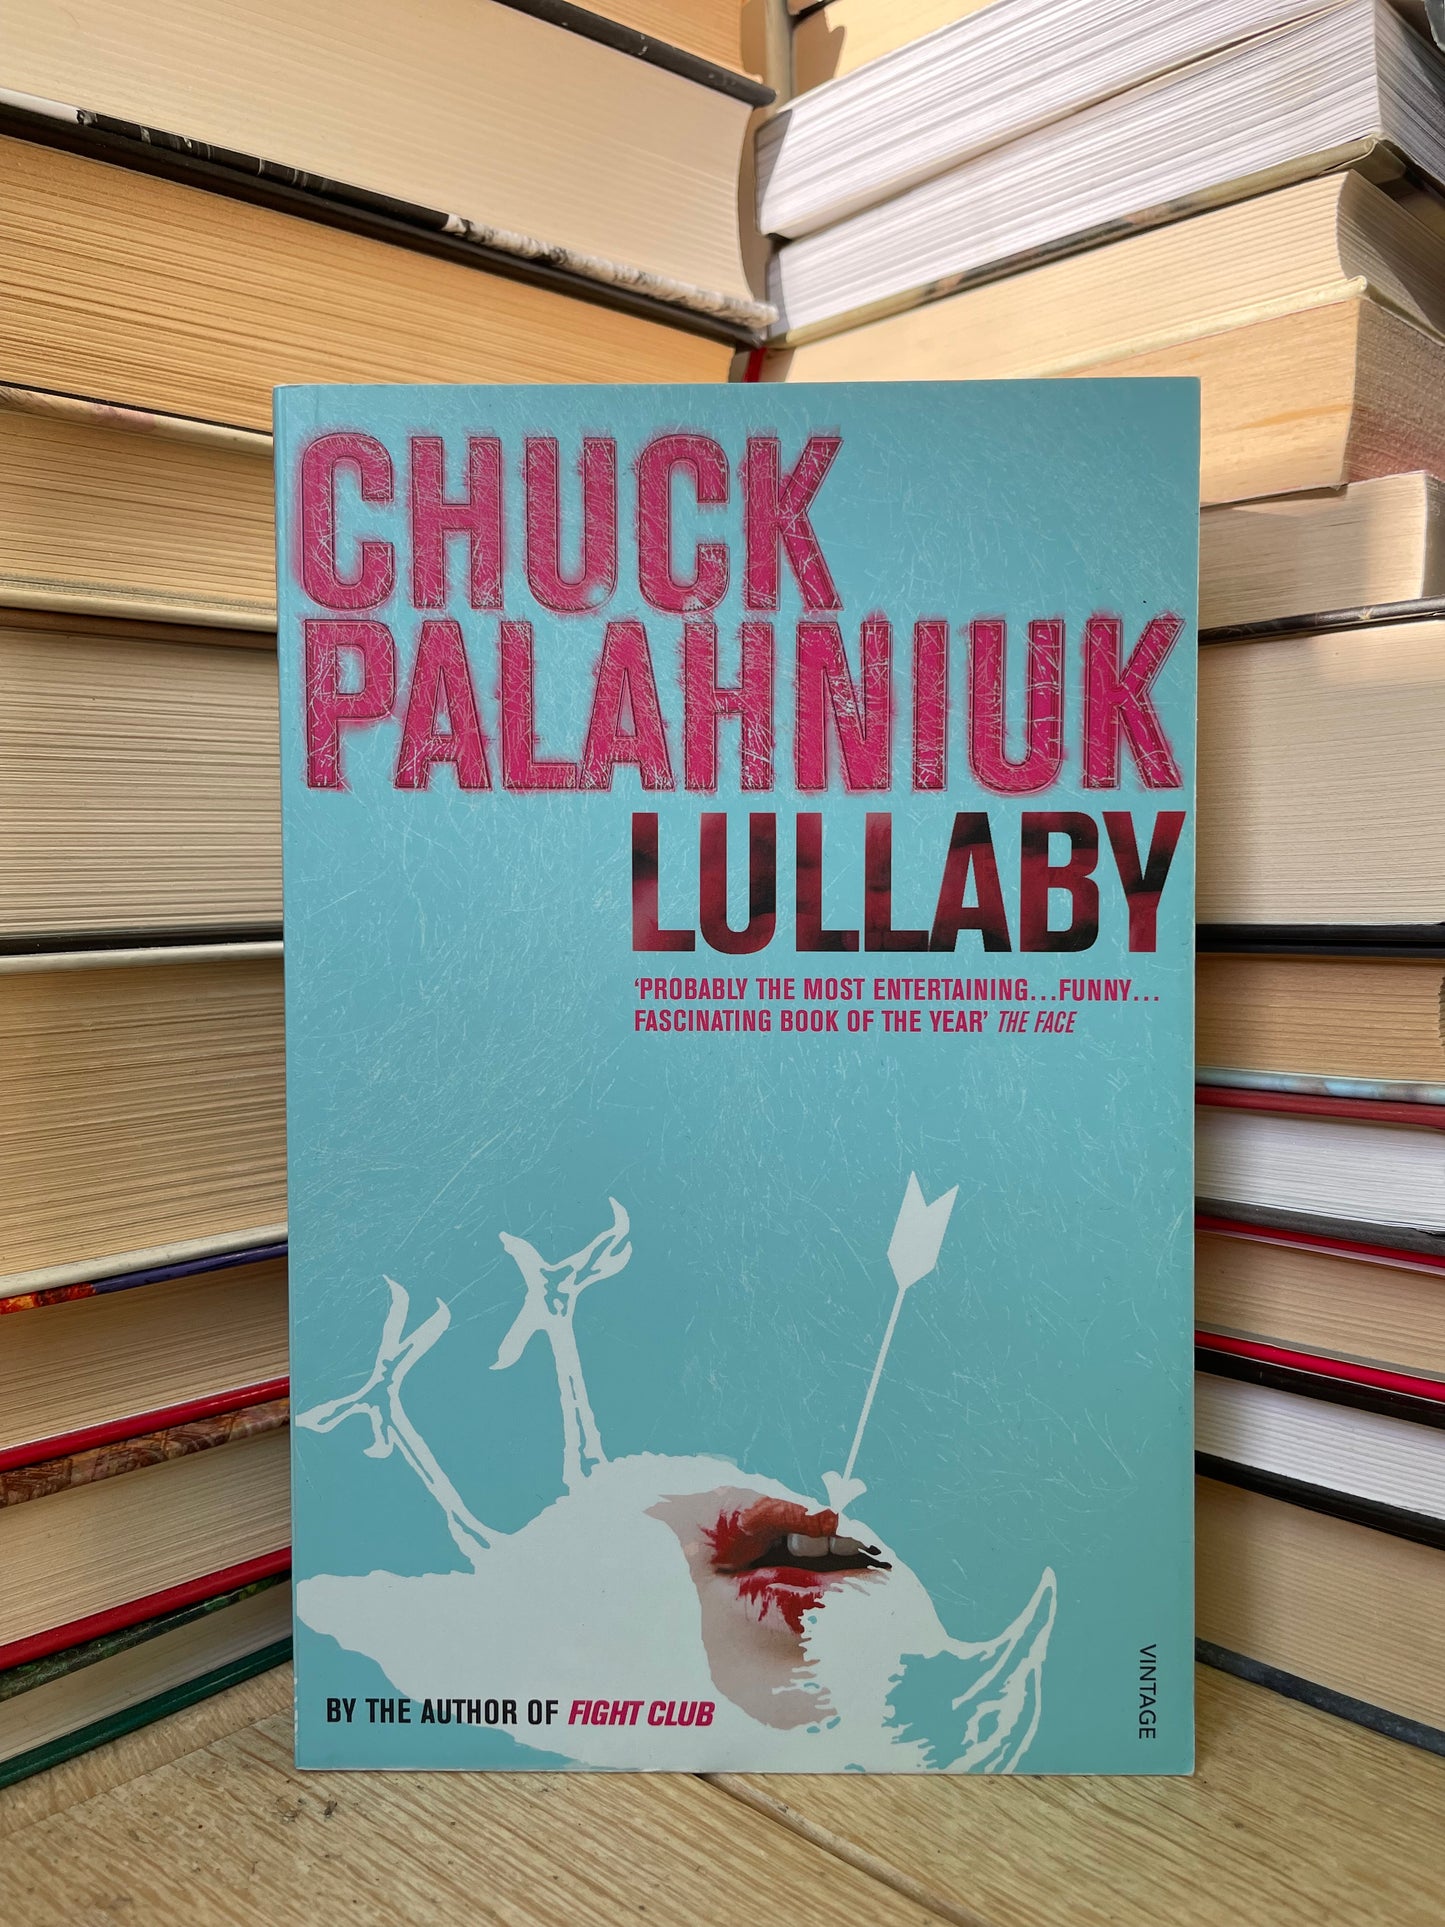 Chuck Palahniuk - Lullaby